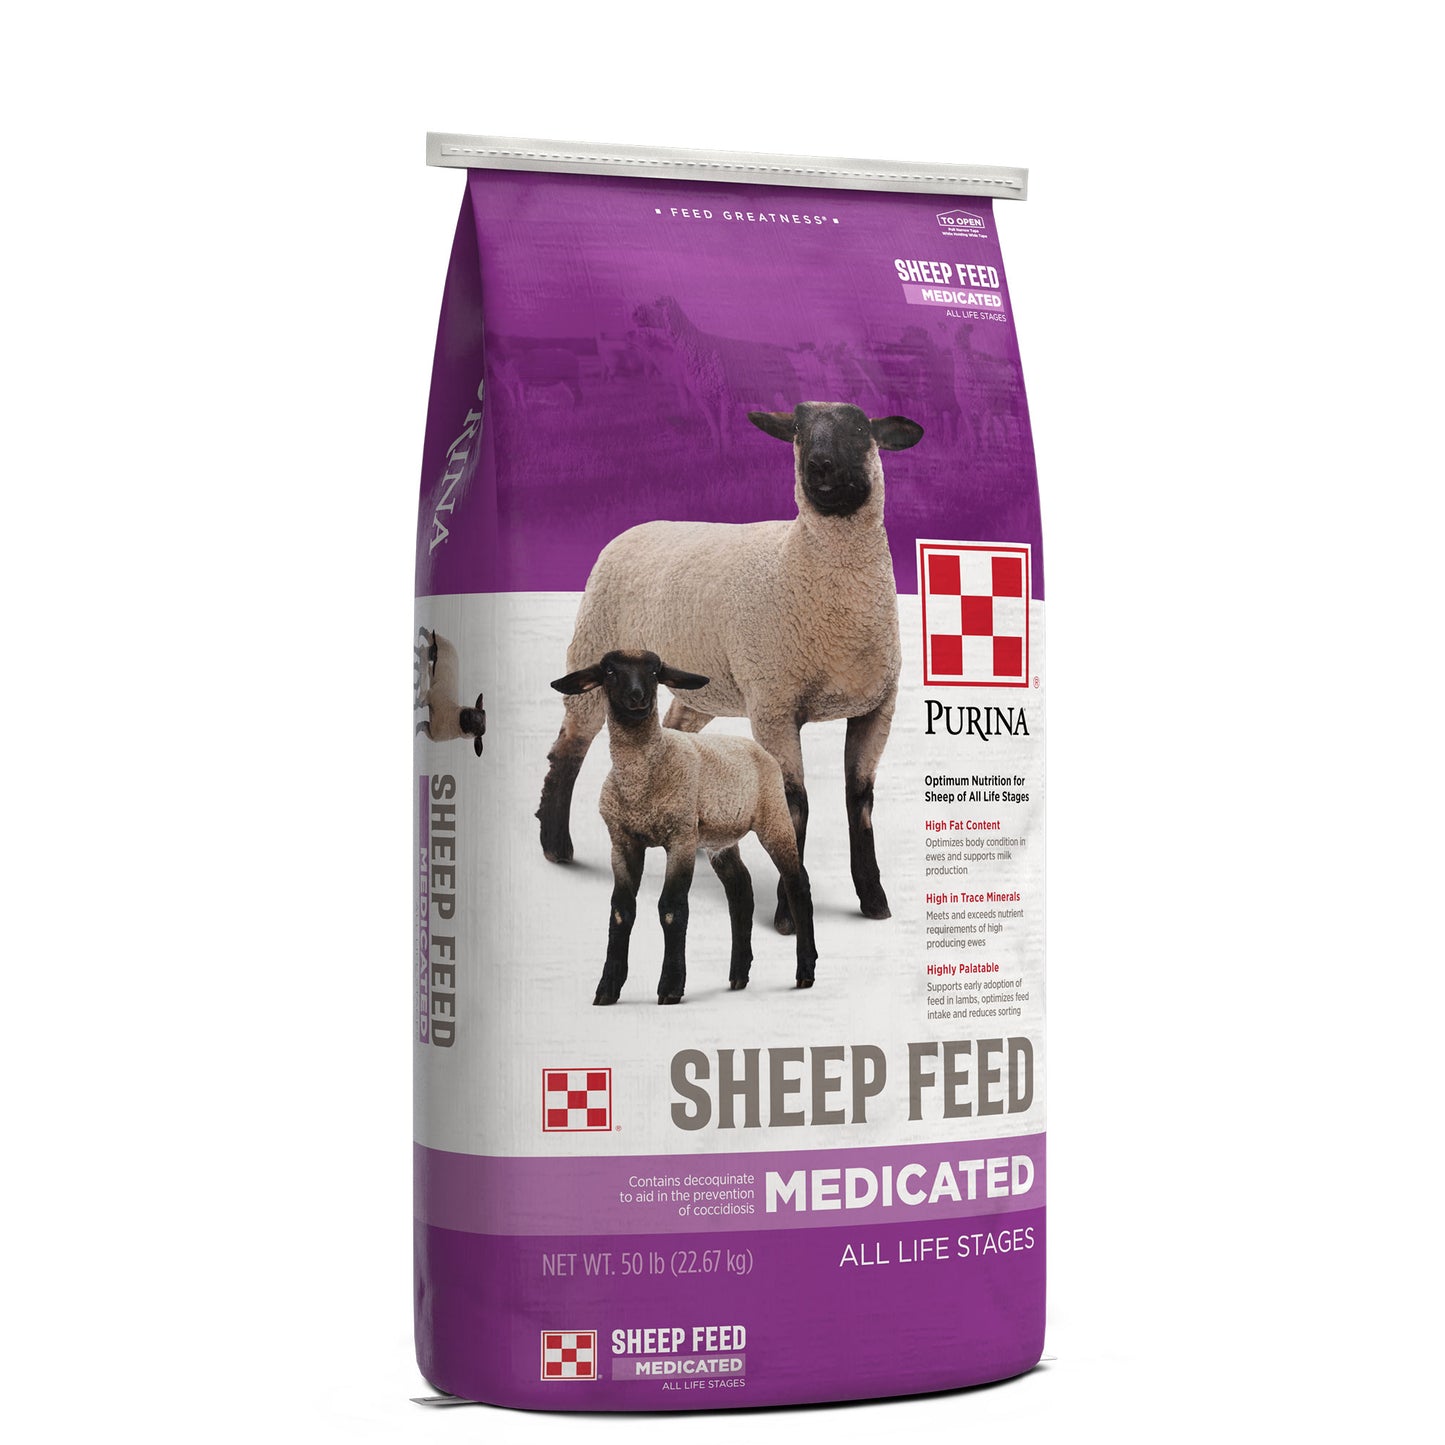 Purina Lamb & Ewe 15 DX30 Sheep Feed 50 Pound Bag Angled Left